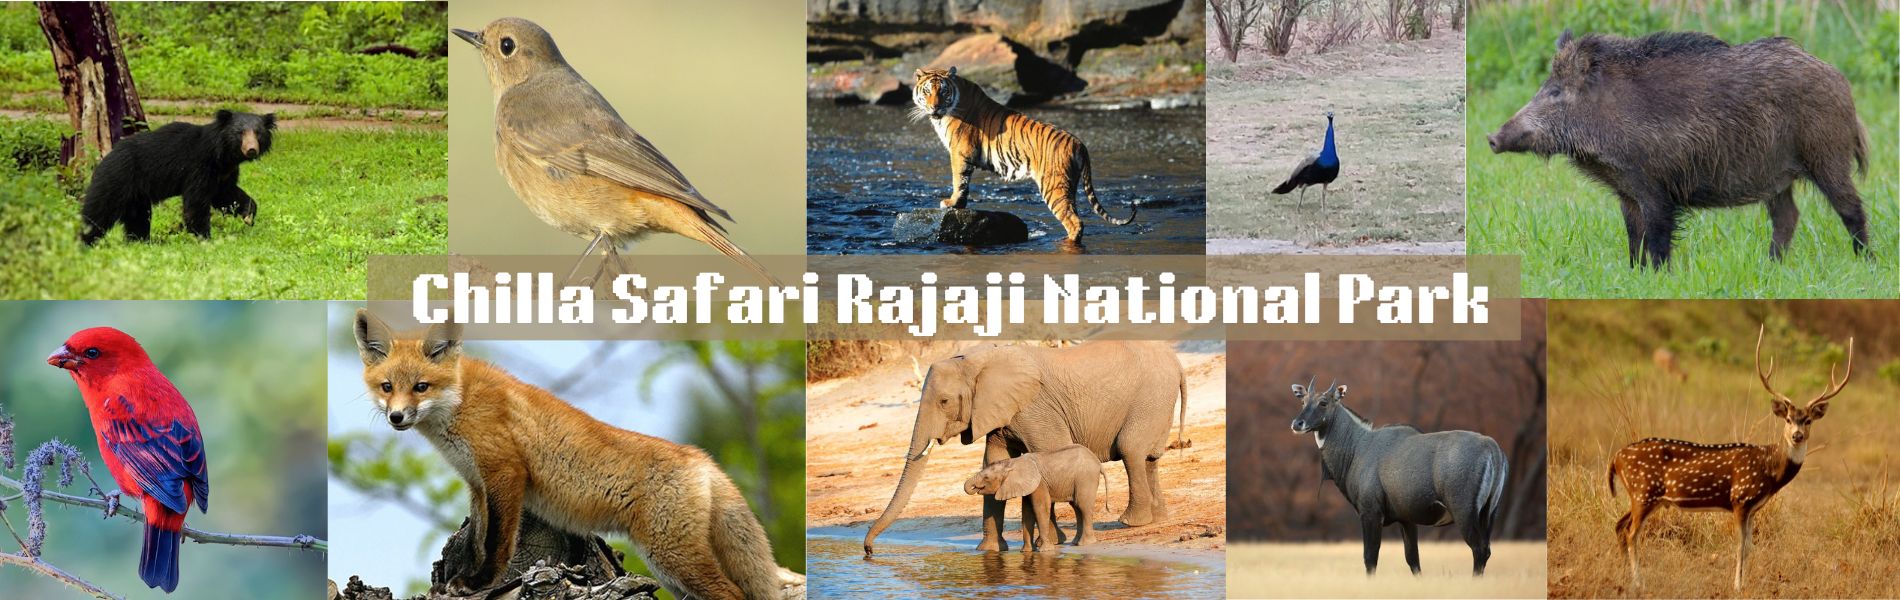 Chilla Safari Rajaji National Park